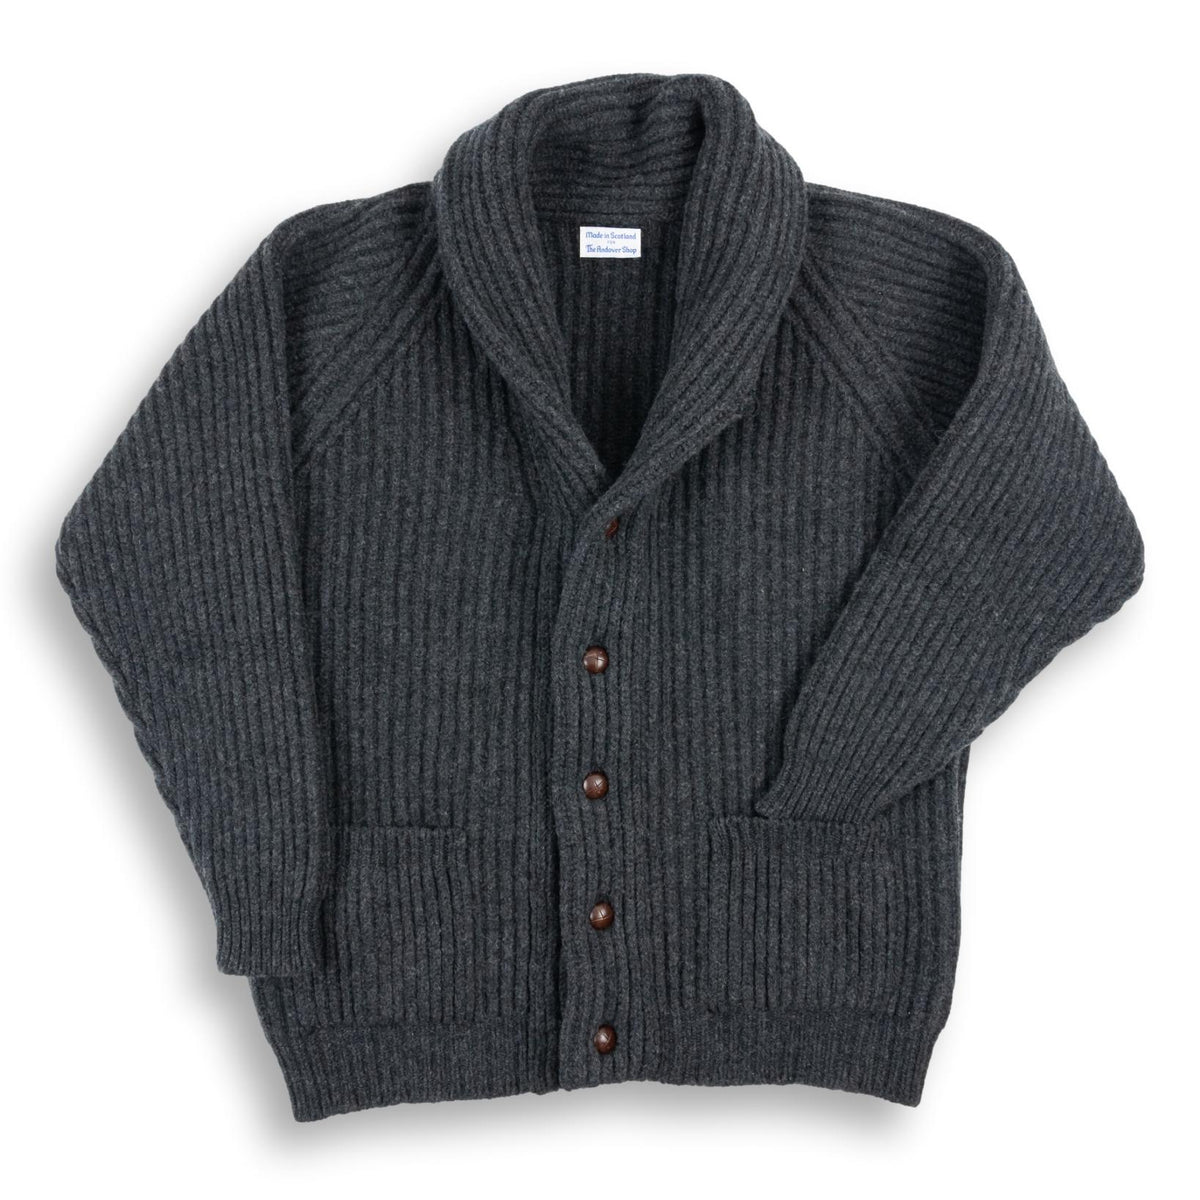 Ymosrh Men's Sweaters, Casual Long Sleeve Soft Shawl Collar